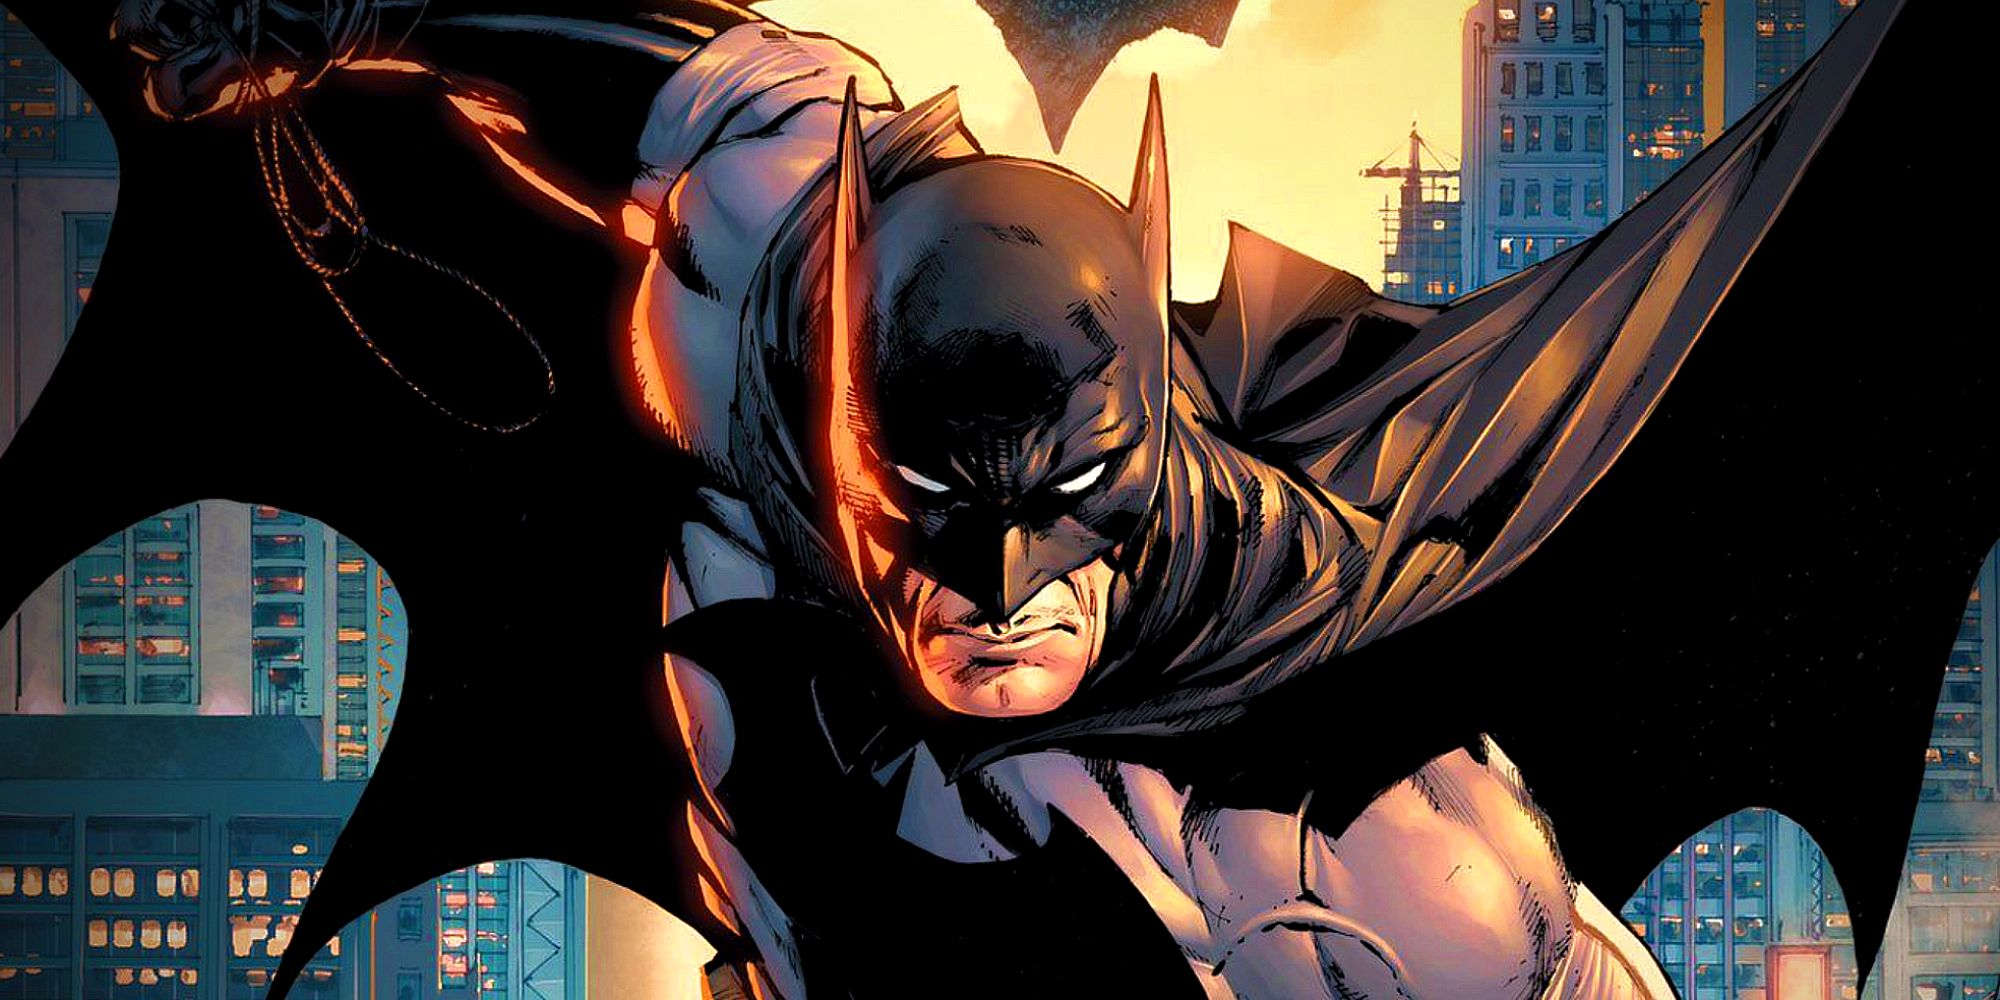 Batman standing resolutely against a Gotham City backdrop